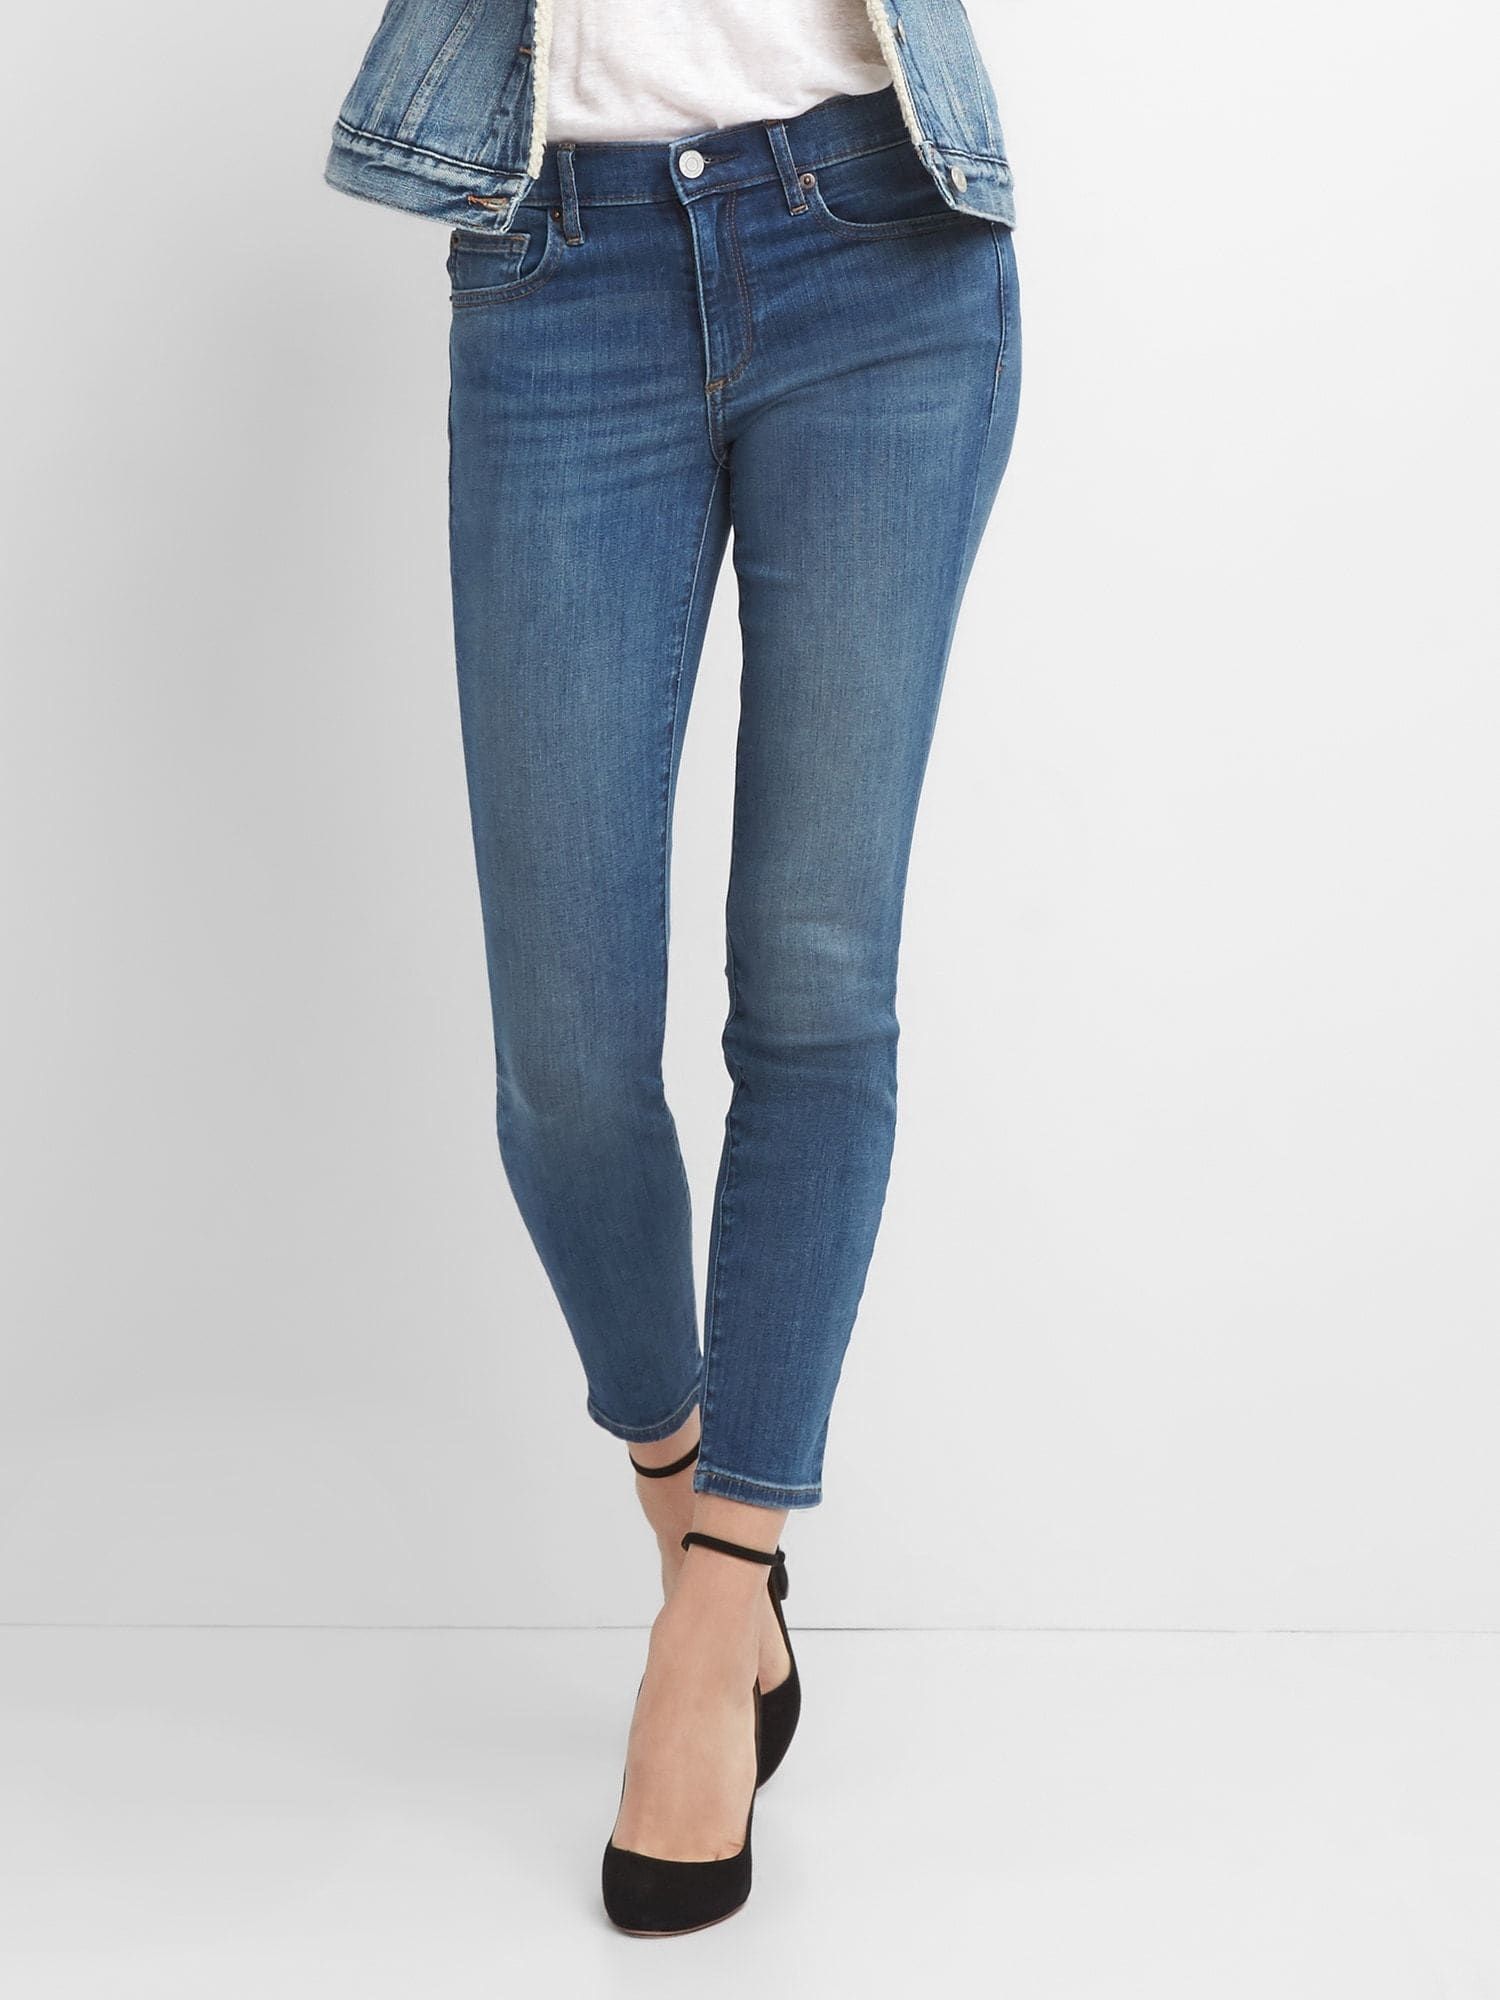 m&s womens skinny jeans